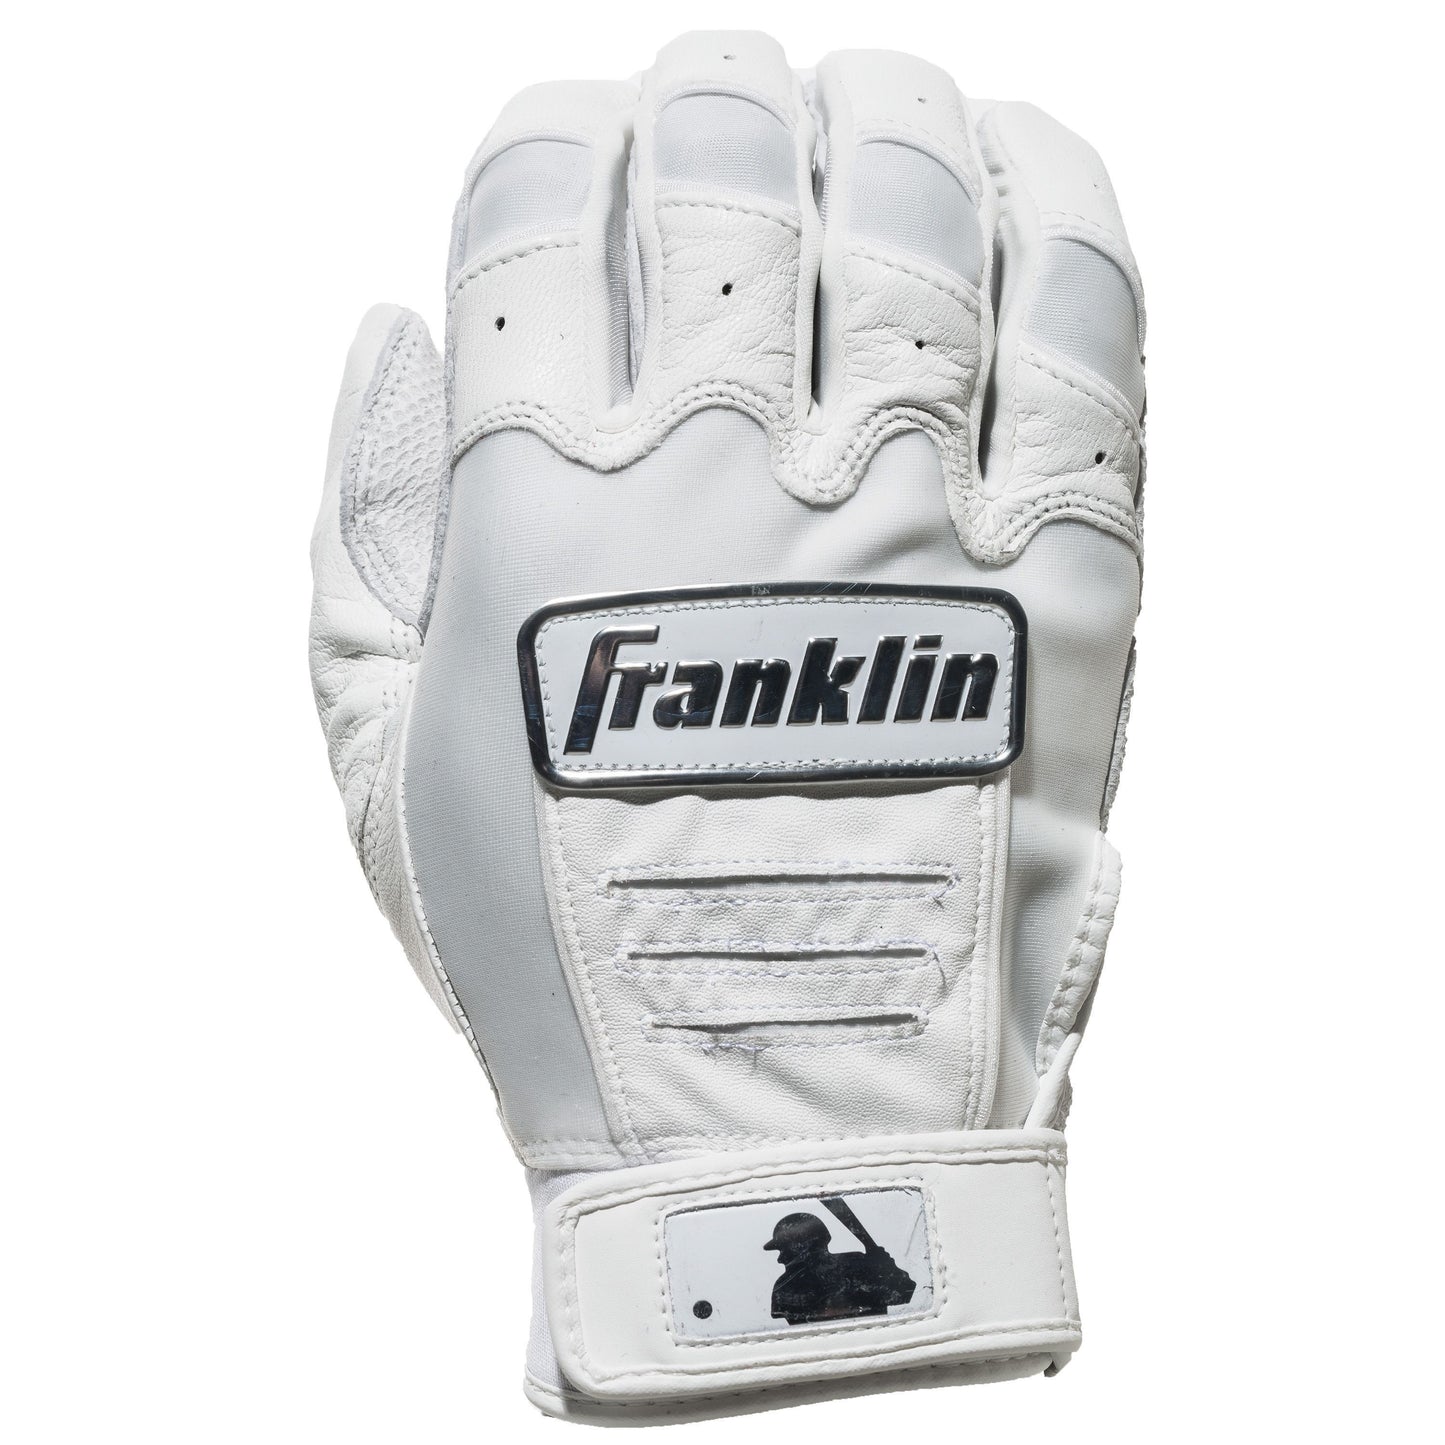 Franklin CFX Pro Batting Glove (Adult)